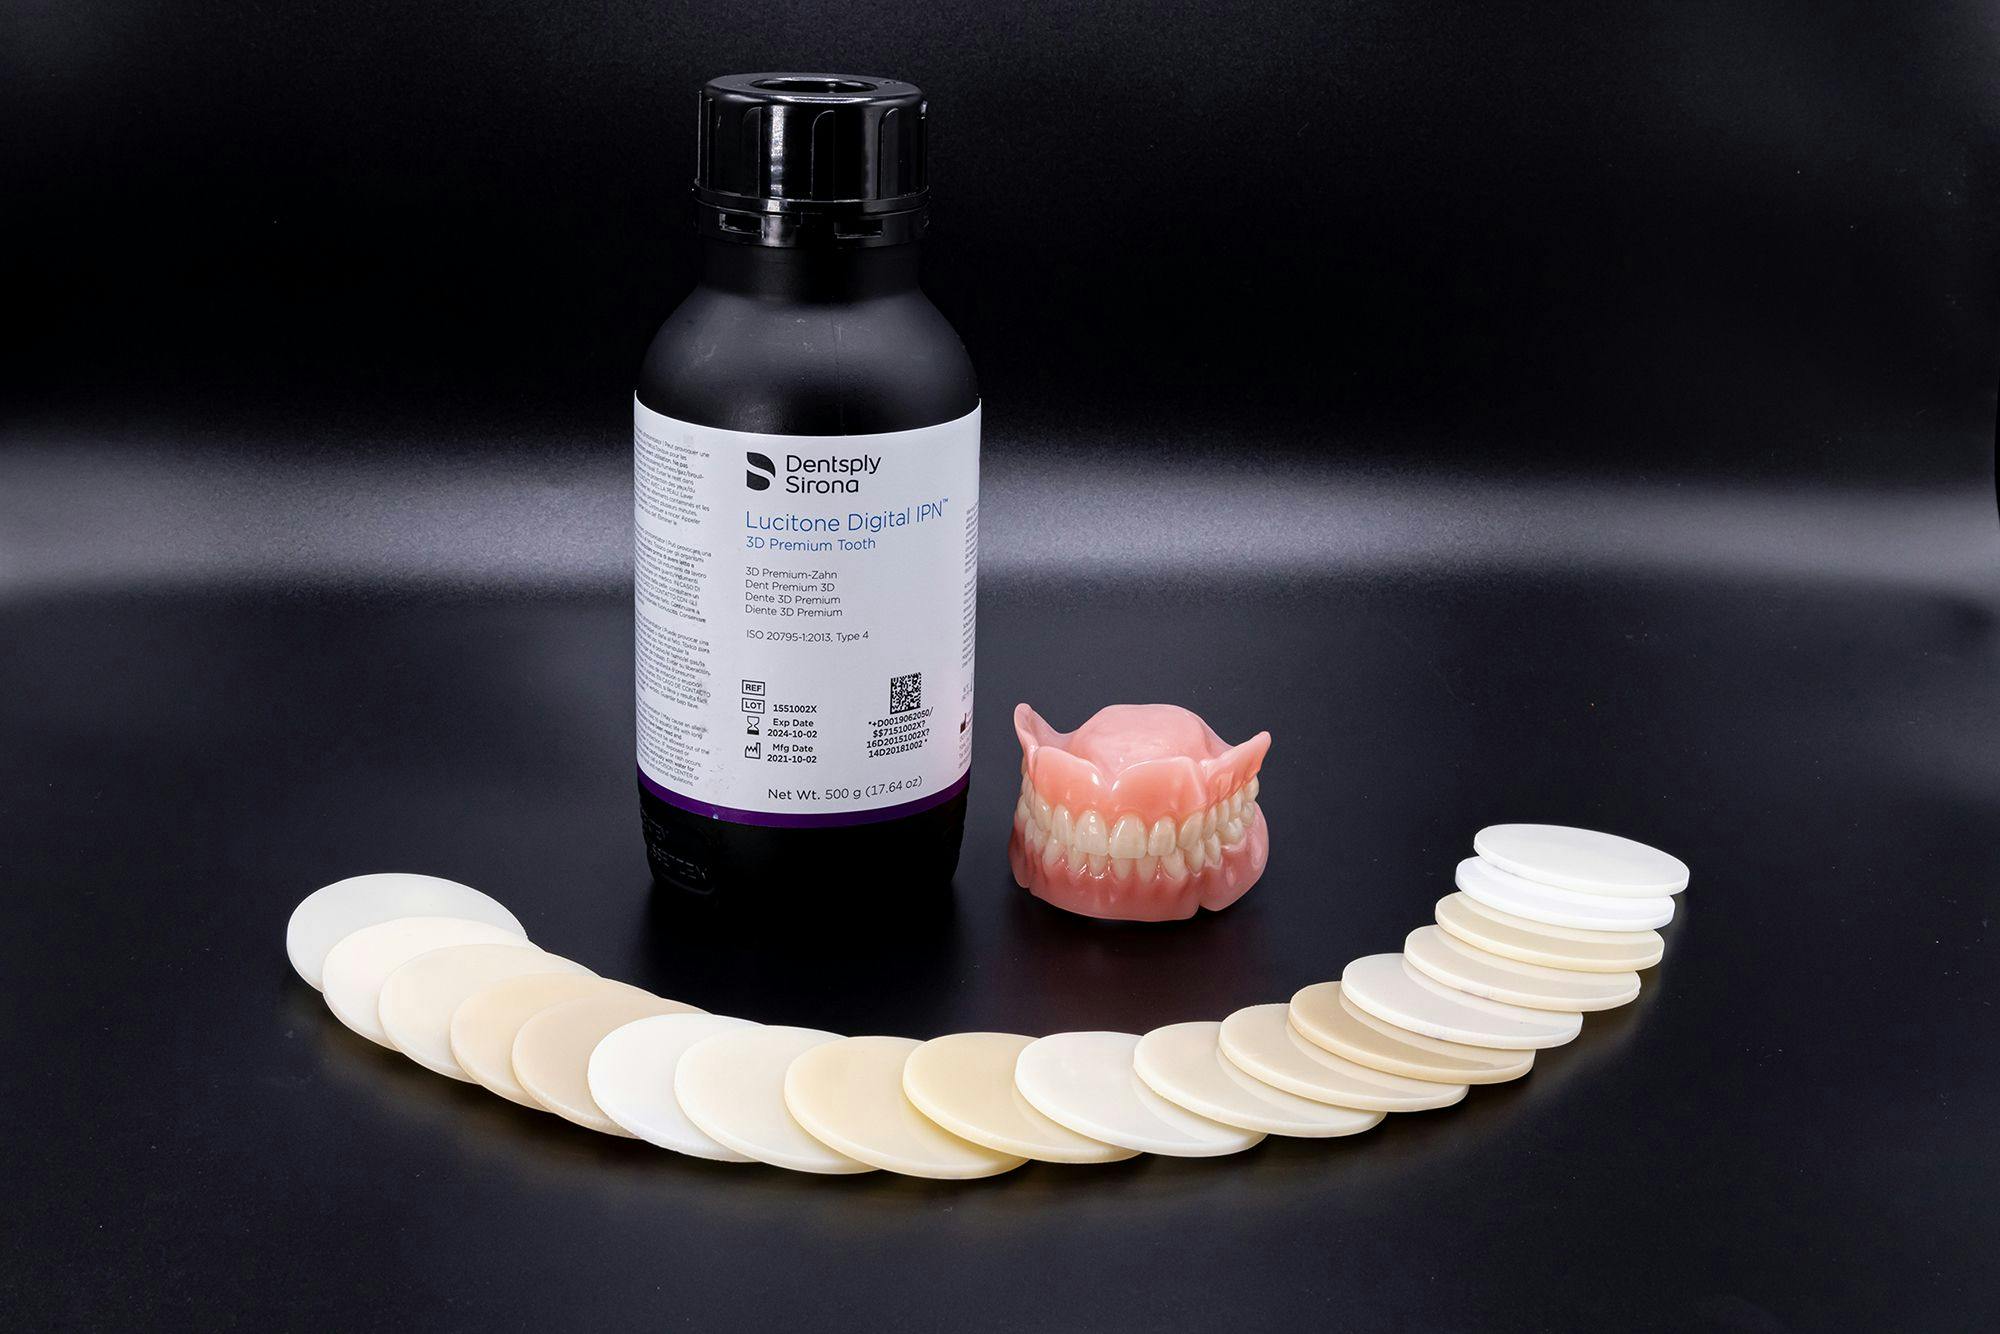 Dentsply Sirona Introduces Lucitone Digital IPN 3D Premium Tooth